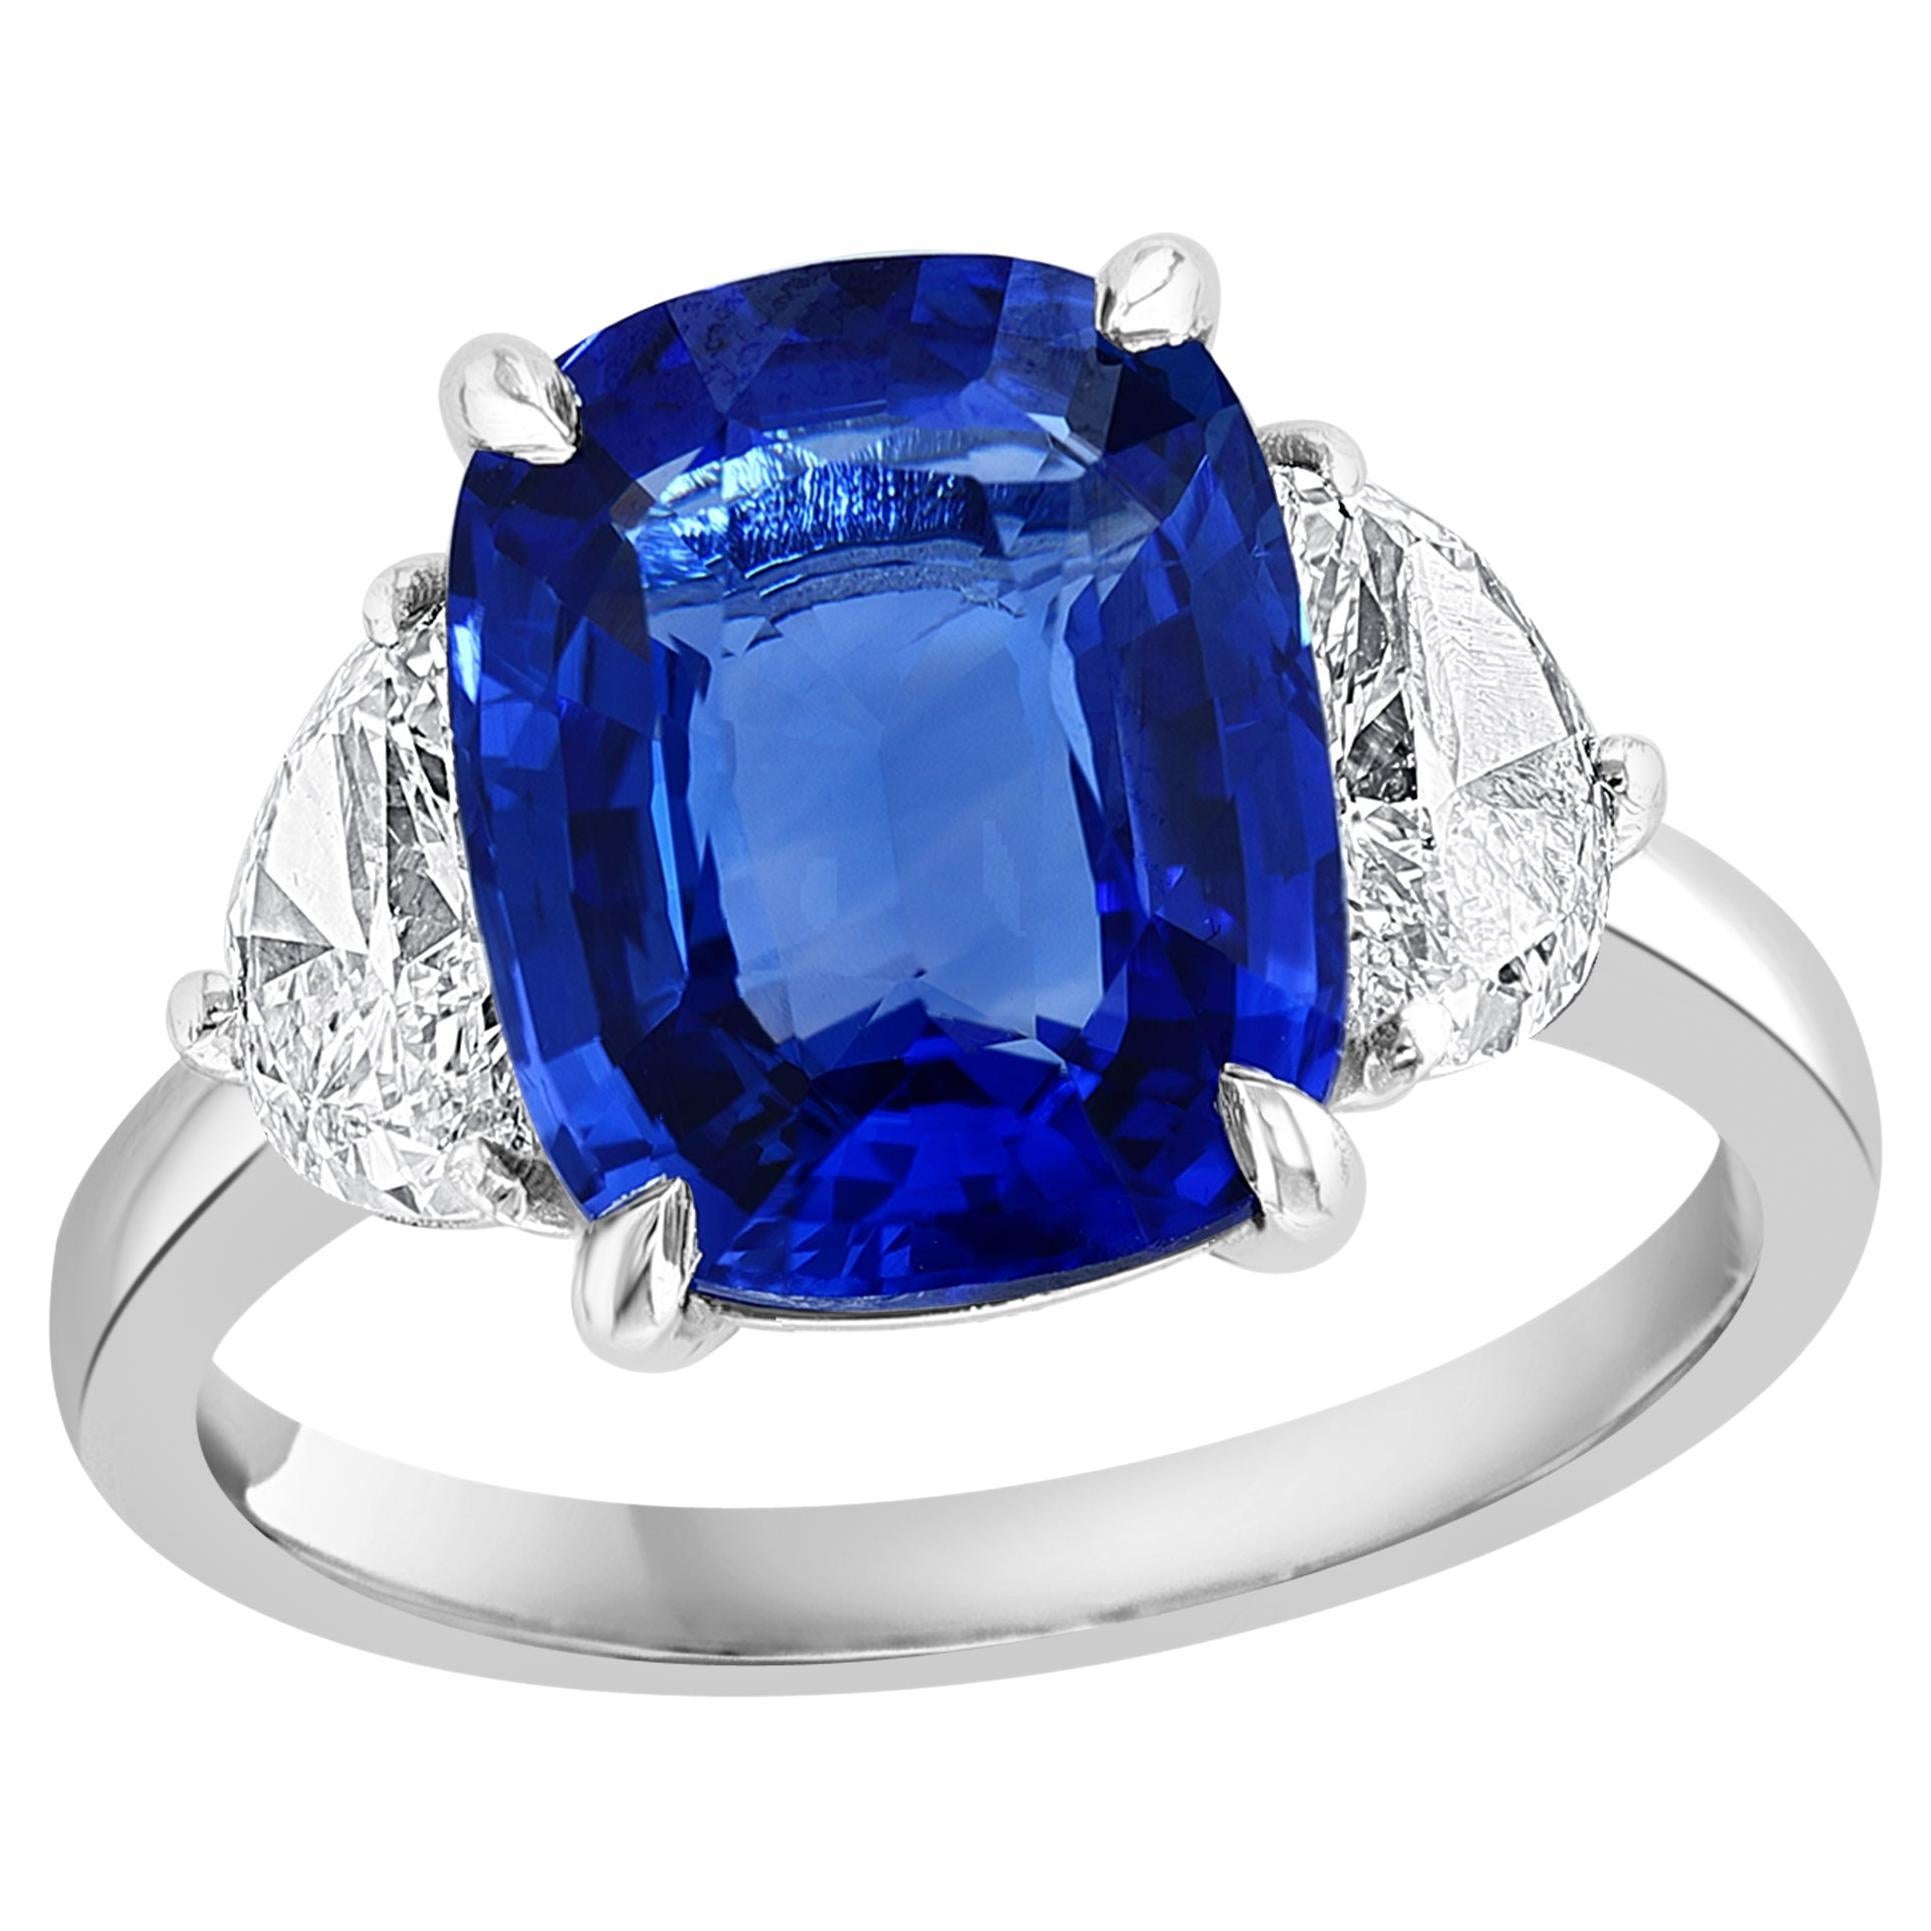 5.12 Carat Cushion Blue Sapphire Diamond Three-Stone Engagement Ring in Platinum